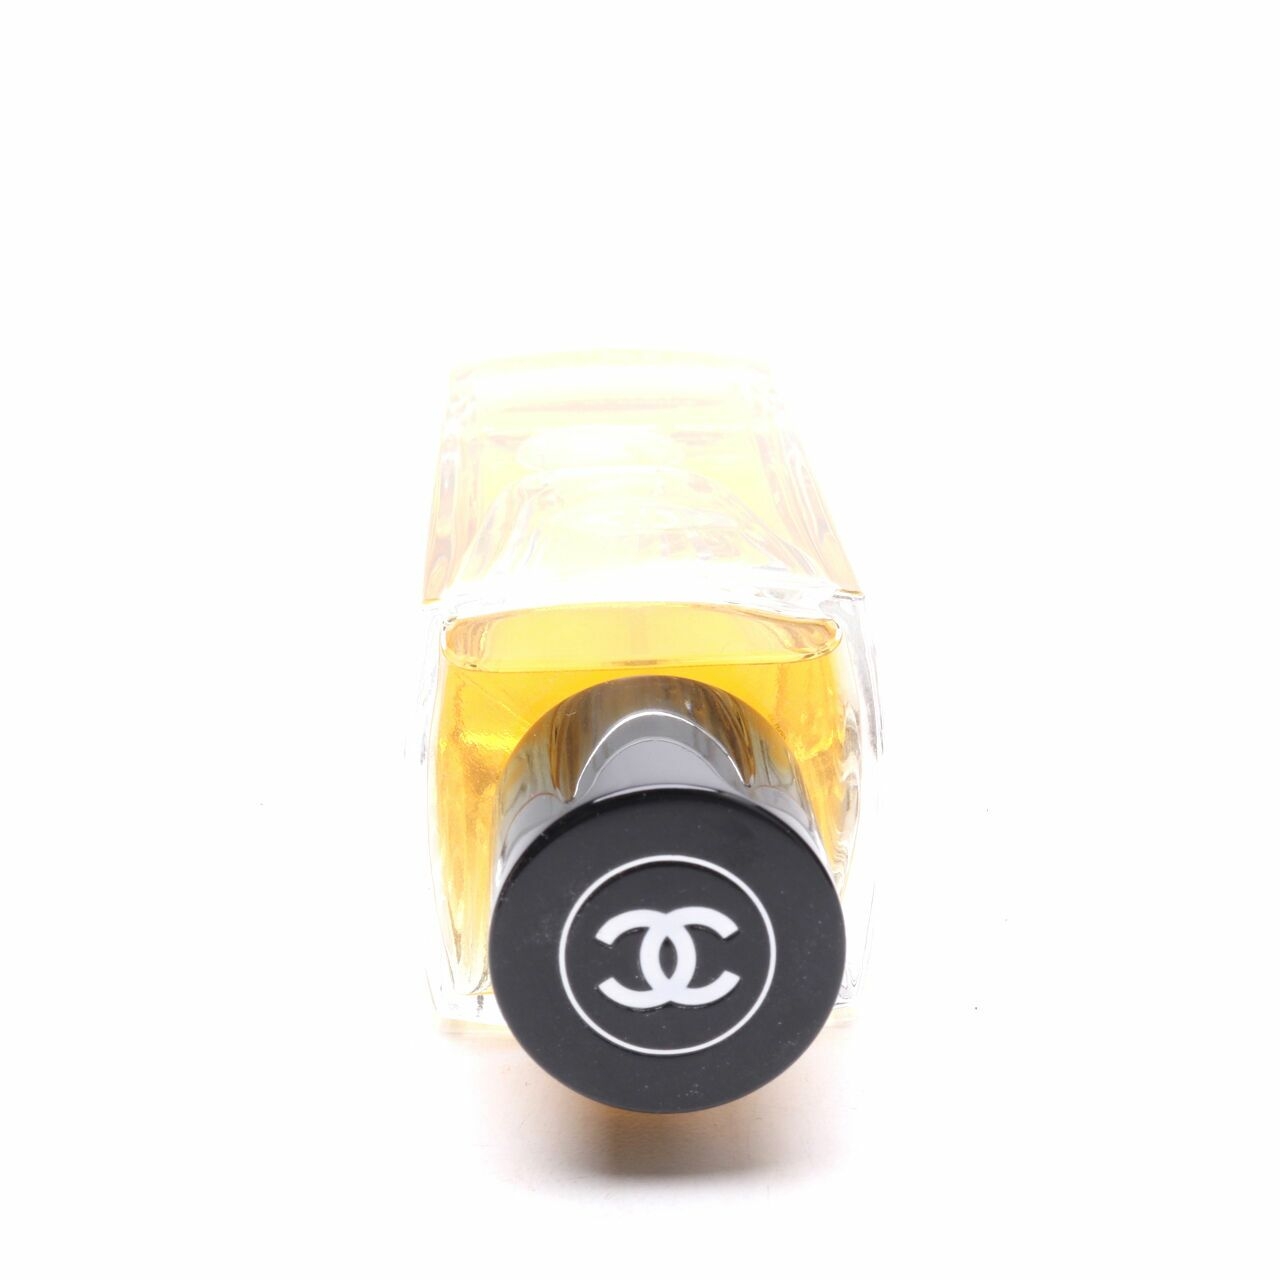 Chanel Le Lion EDP Spray Fragrance